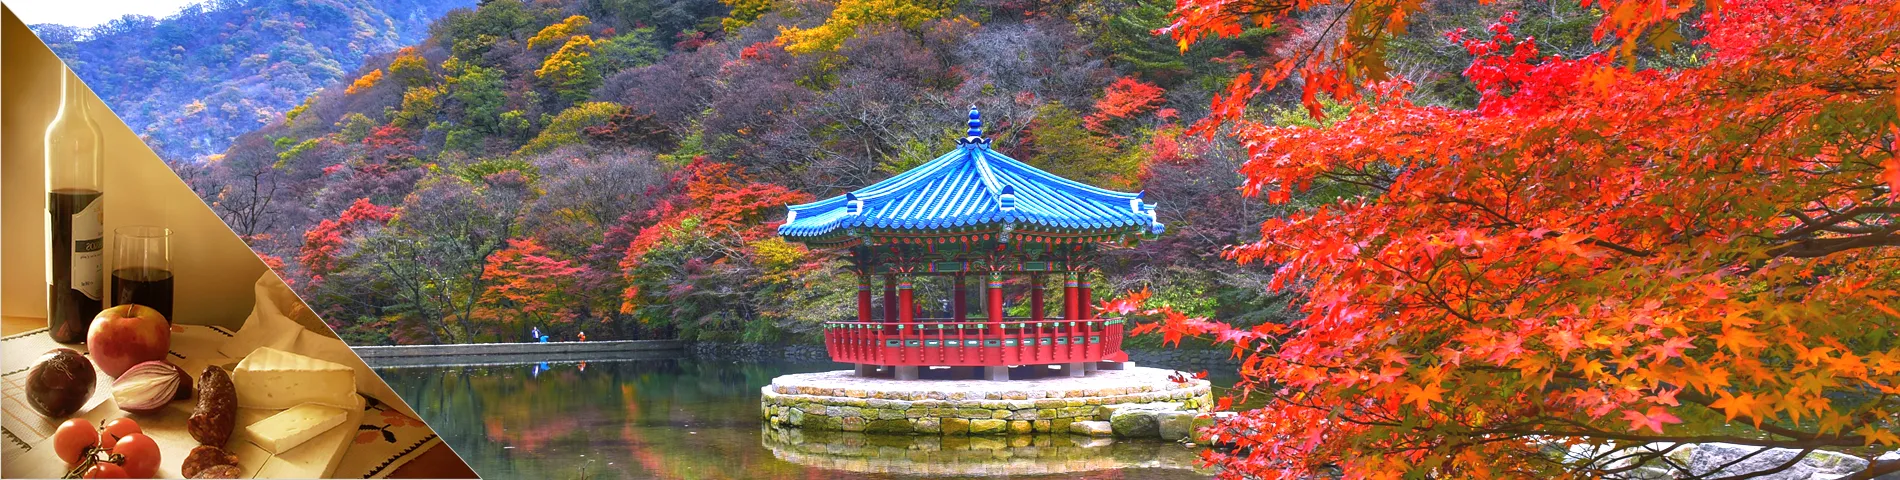 Jižní Korea - Korejština a Kultura